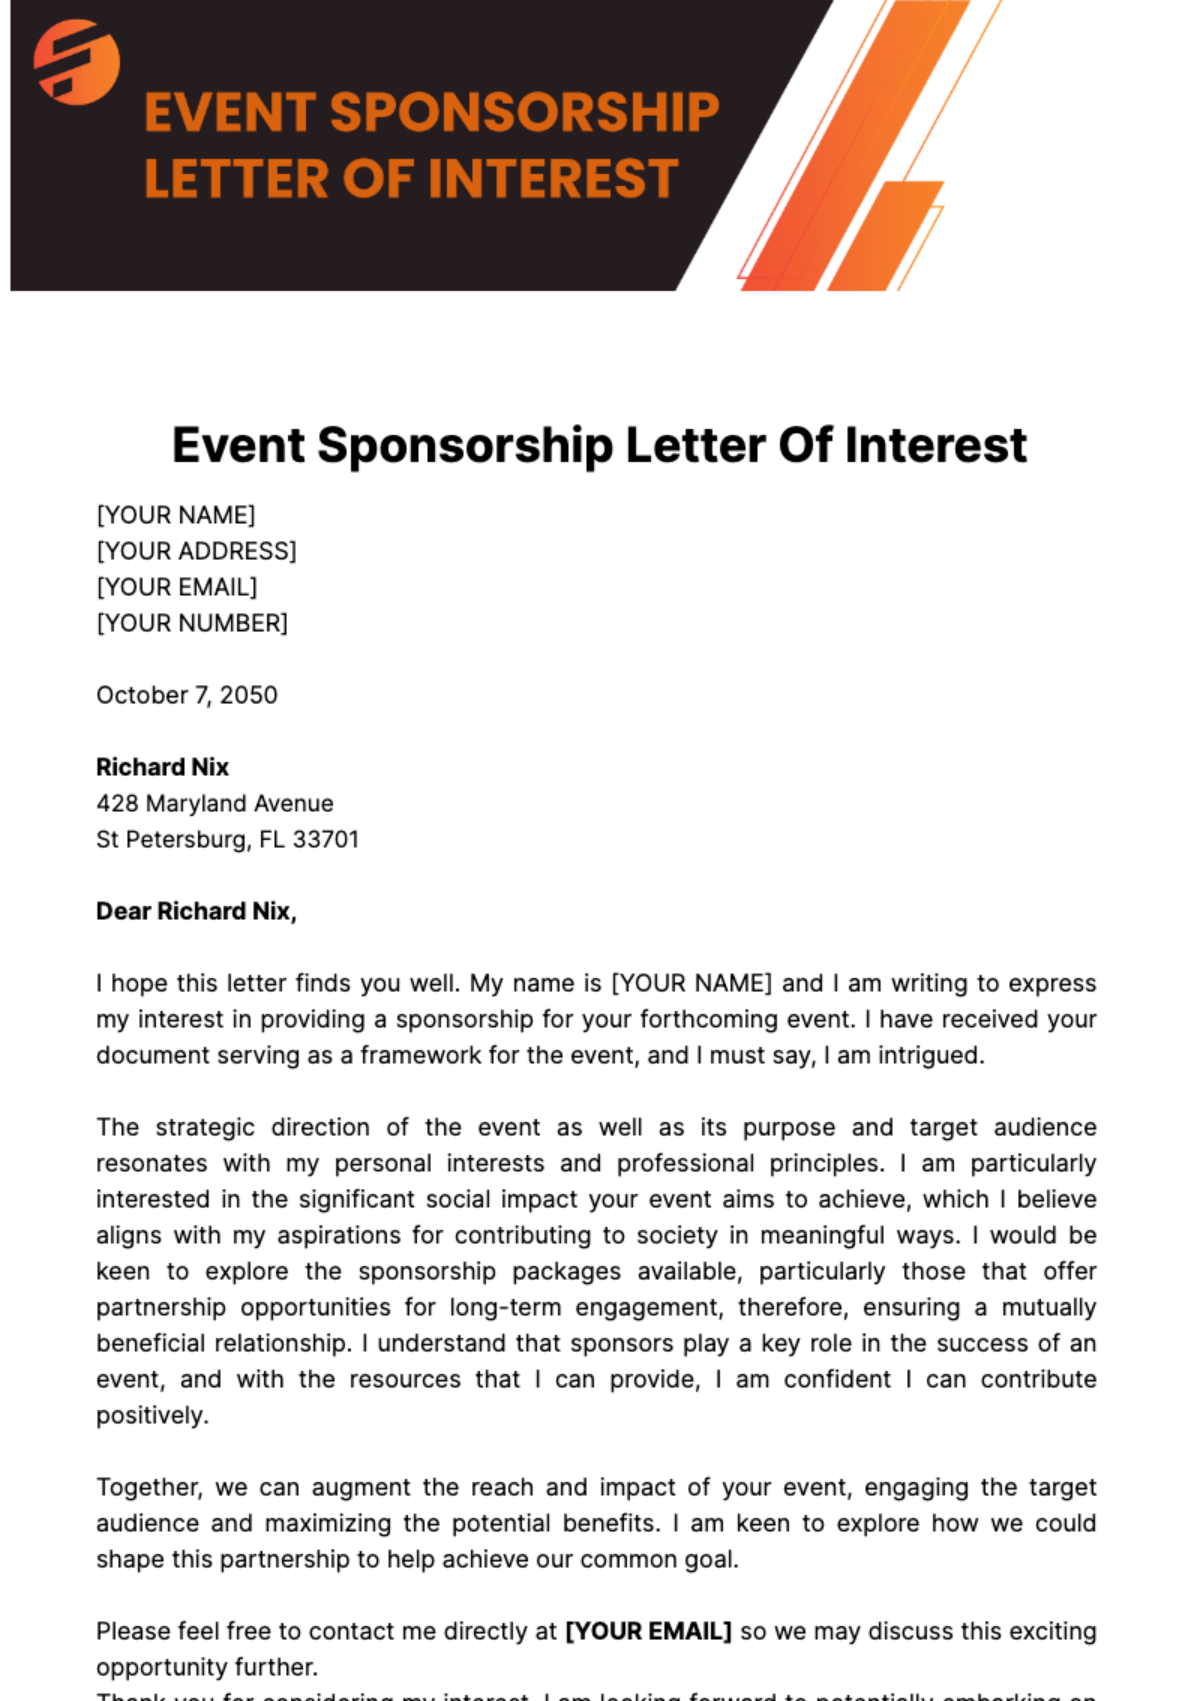 Event Sponsorship Letter of Interest Template